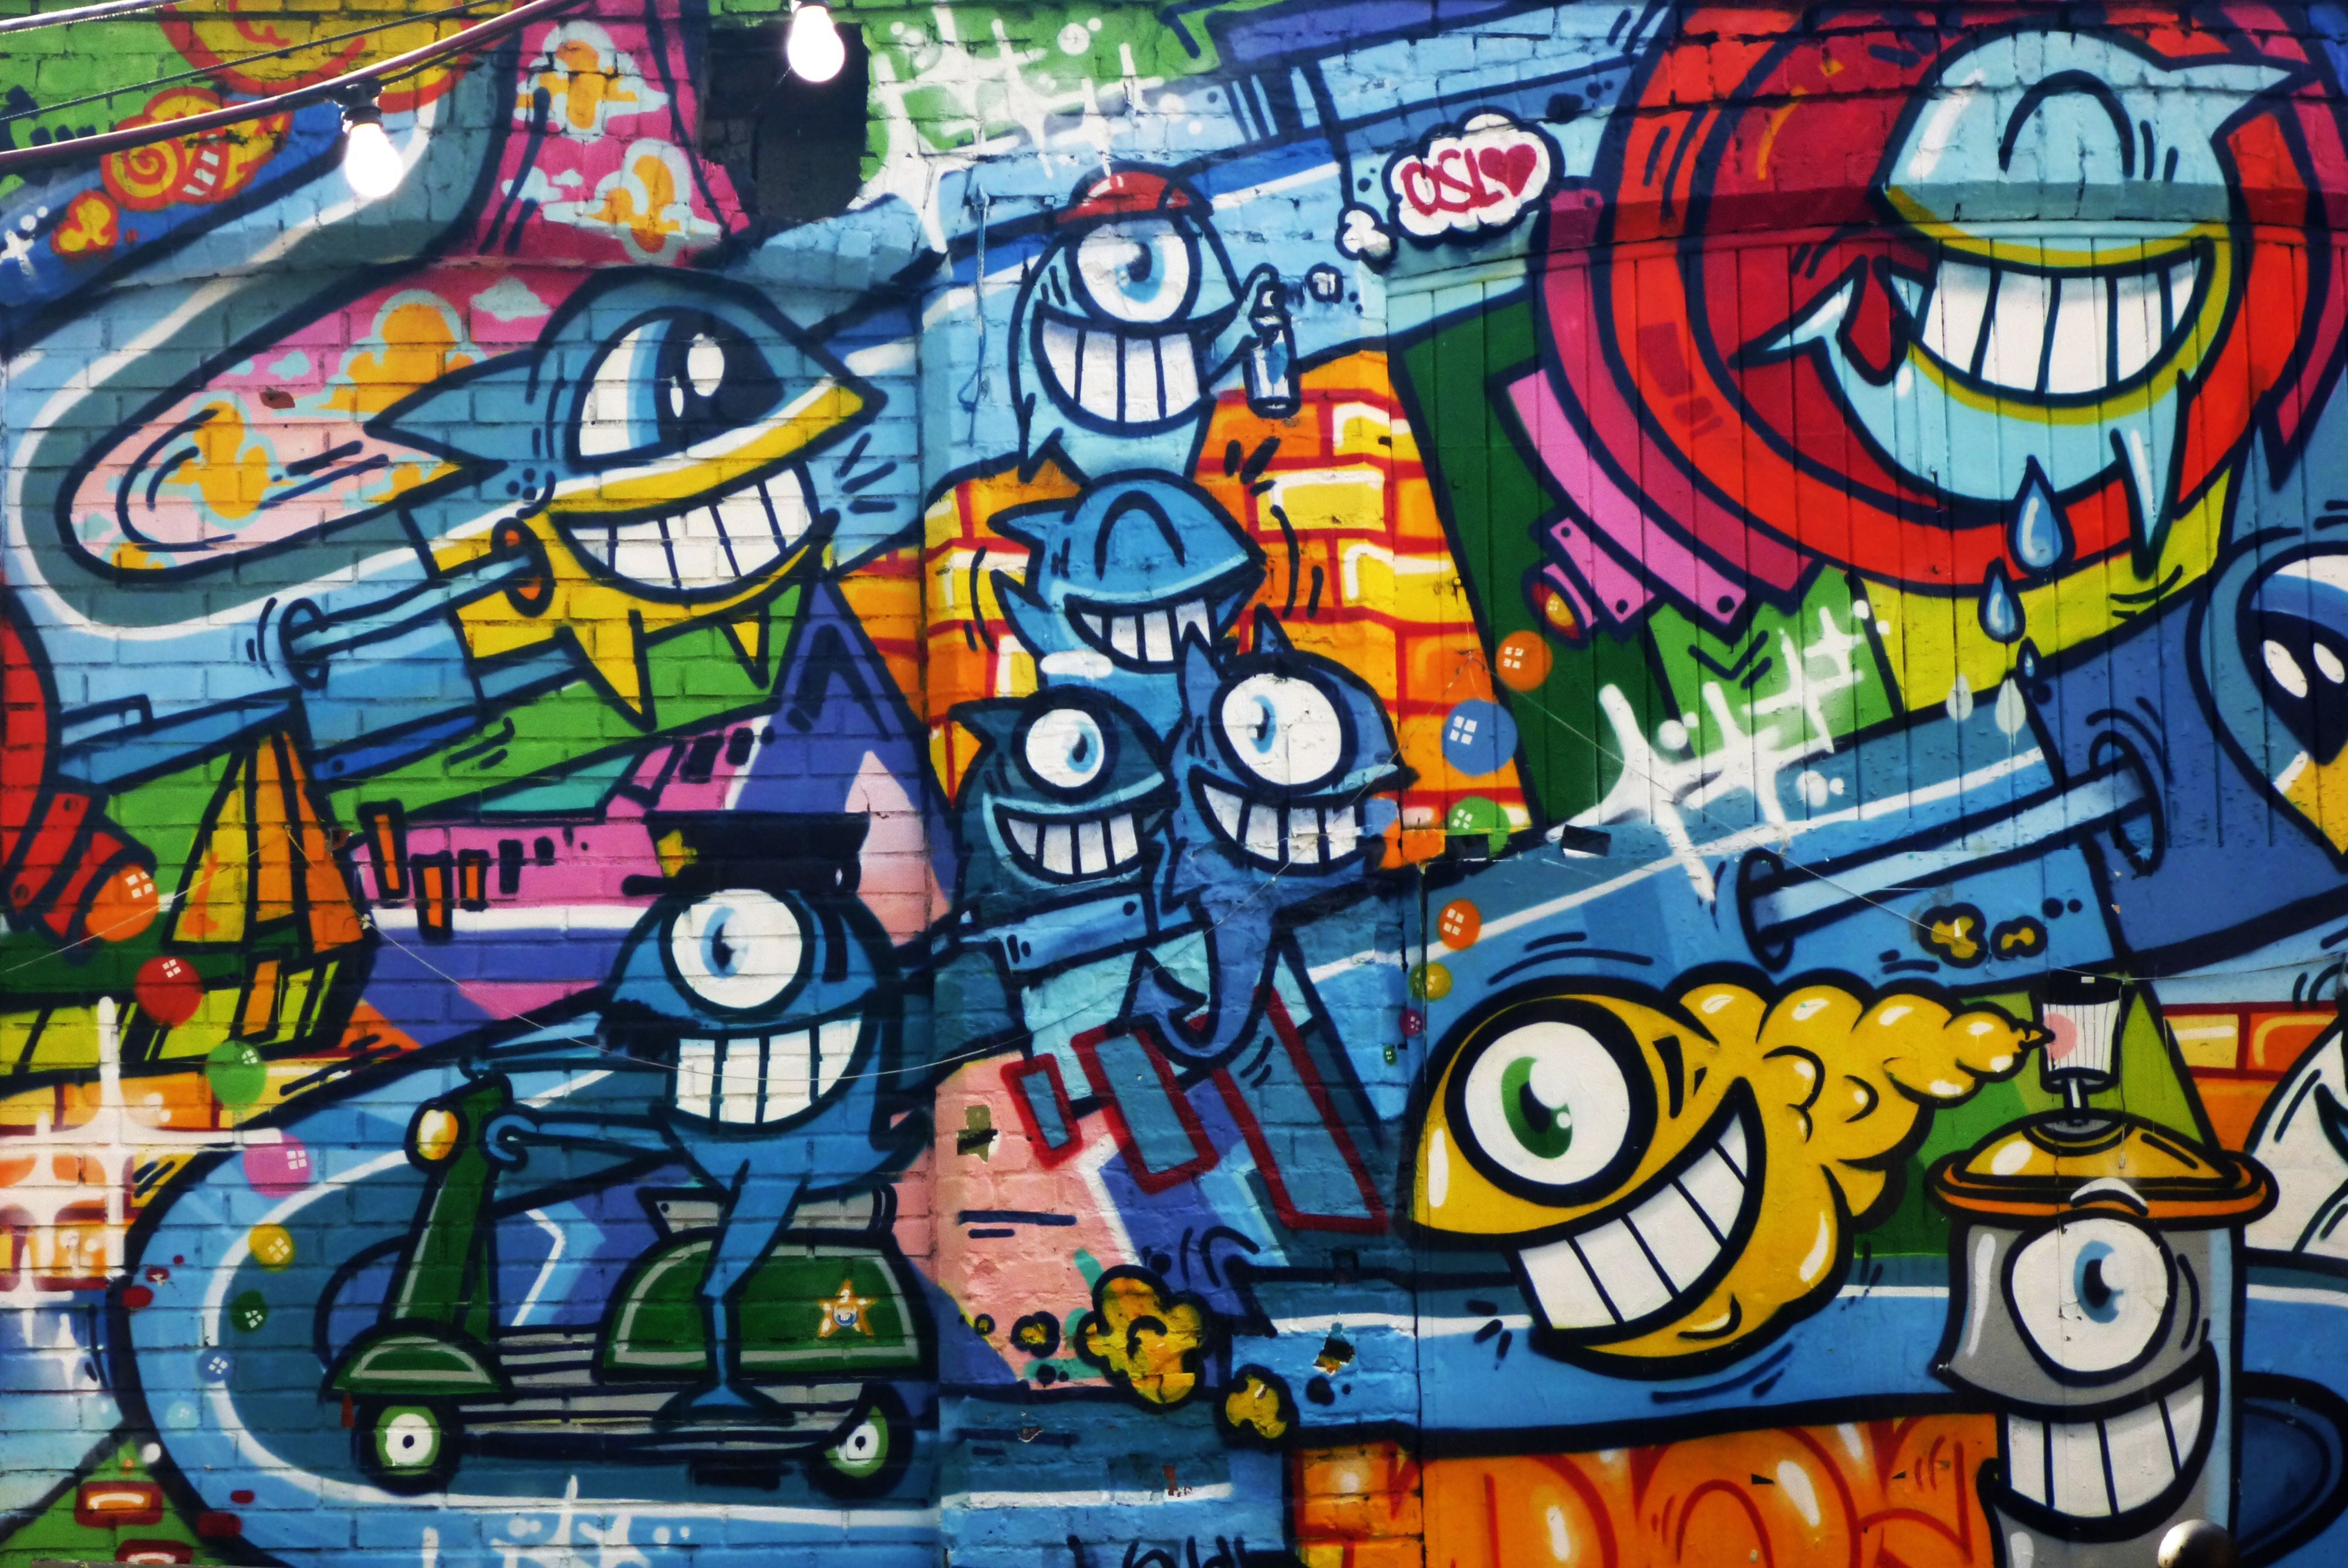 A colorful wall with various graffiti art on it. - Graffiti